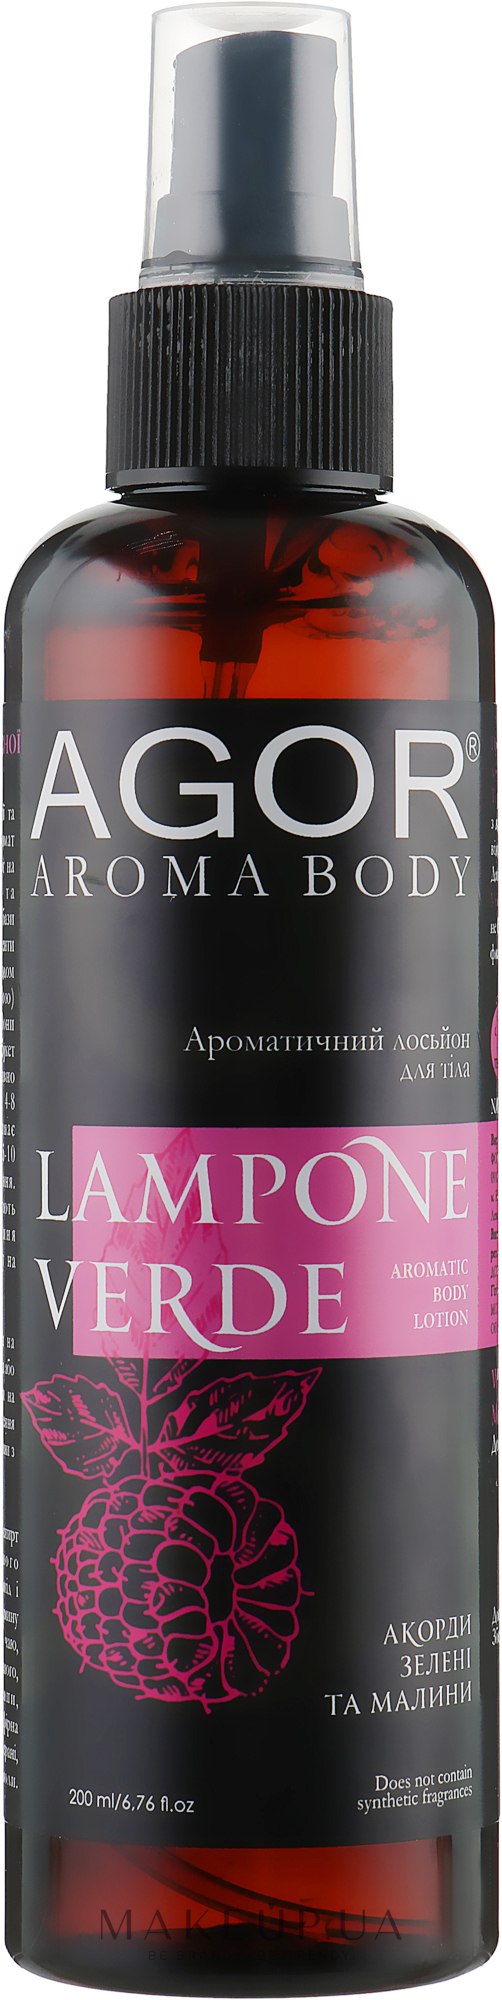 Ароматический лосьон для тела - Agor Aroma Body Lampone Verde  — фото 200ml